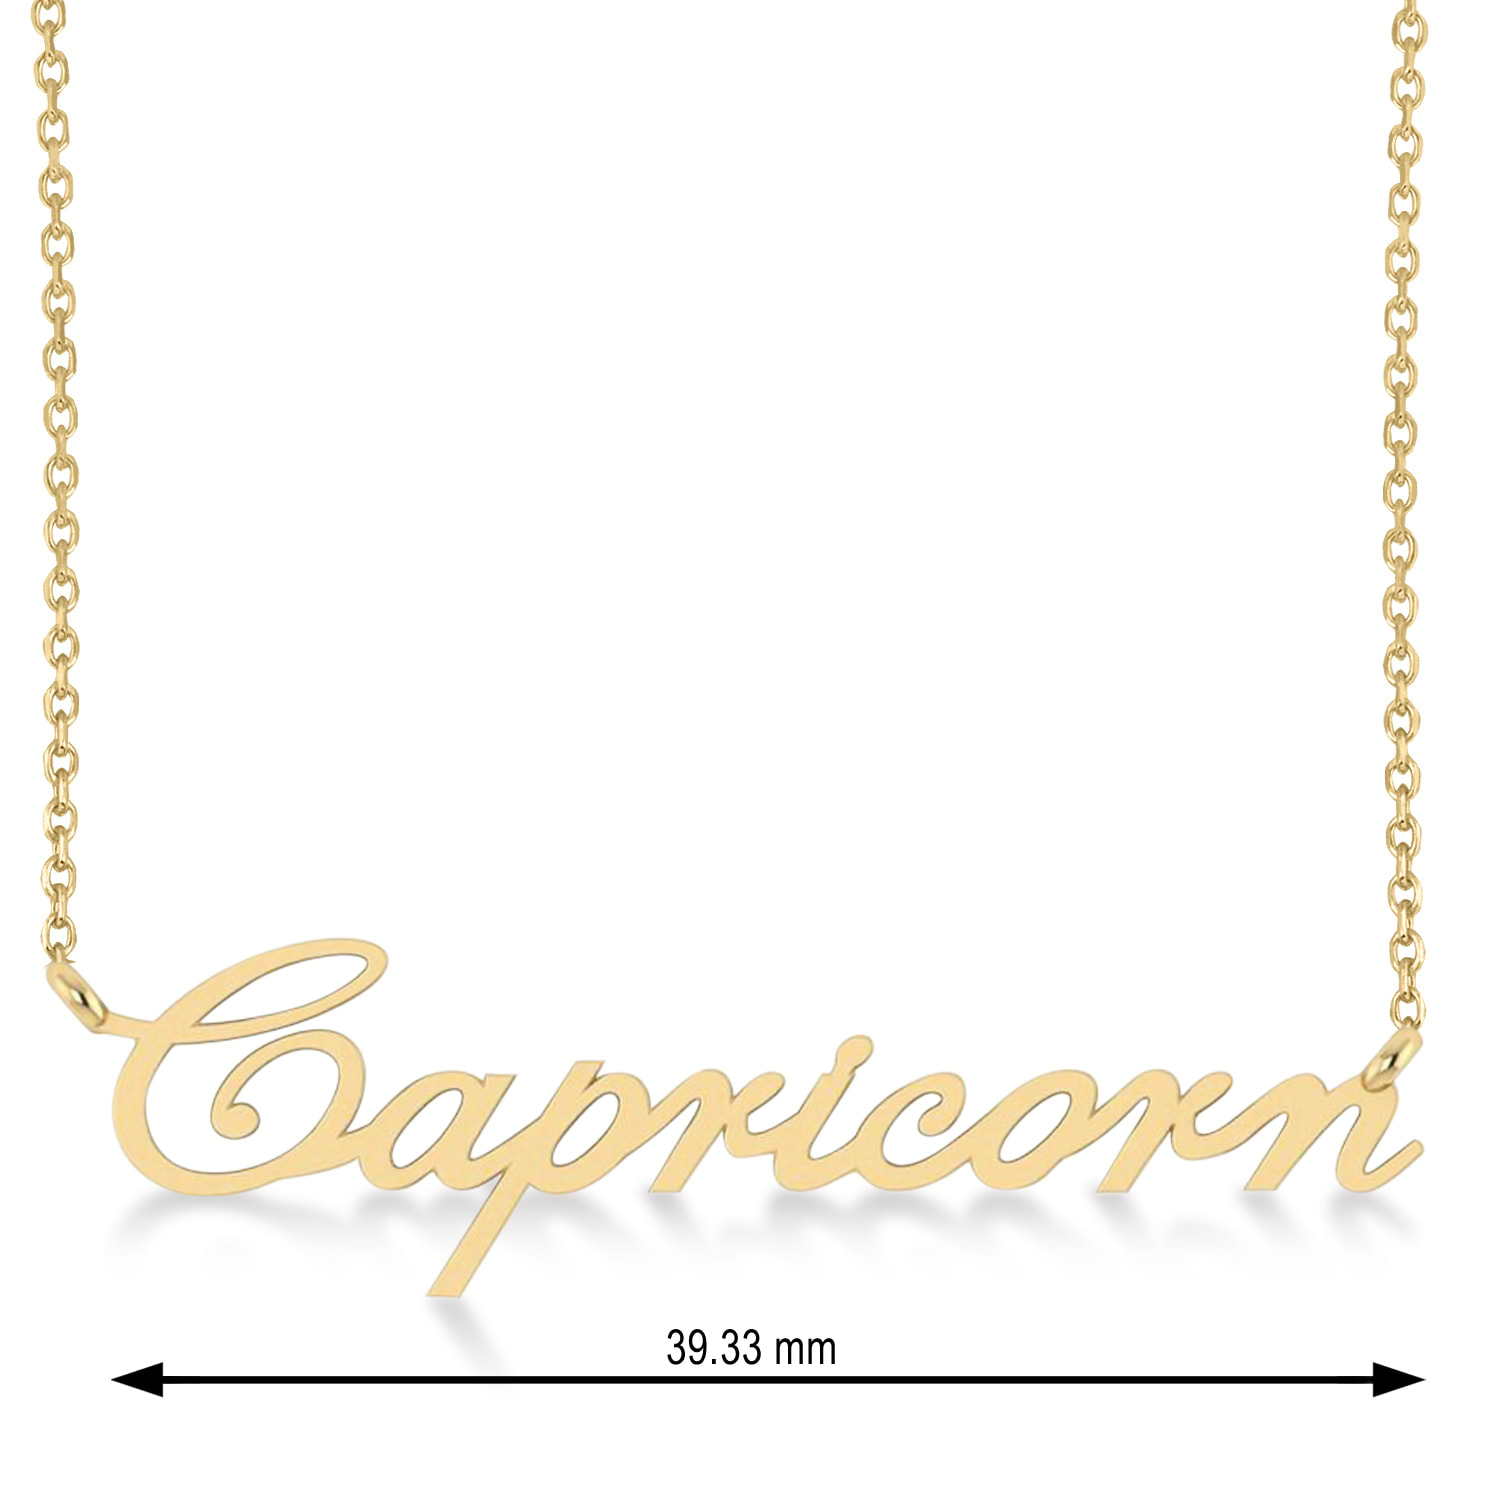 Capricorn Zodiac Text Pendant Necklace 14k Yellow Gold